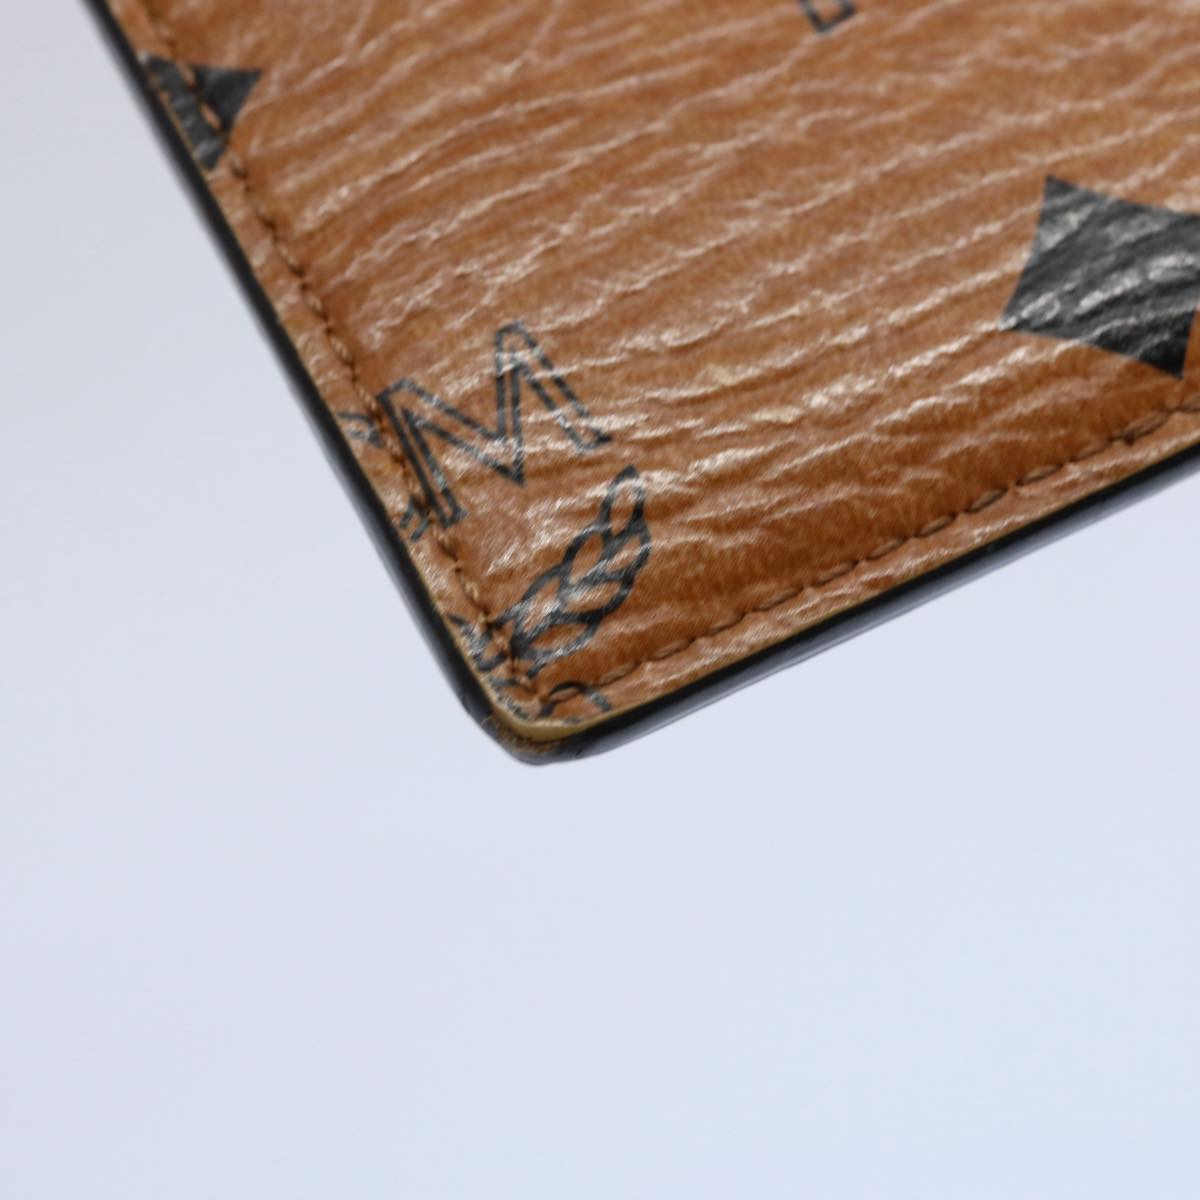 MCM Vicetos Logogram Pass Case PVC Leather Brown Auth ti1391